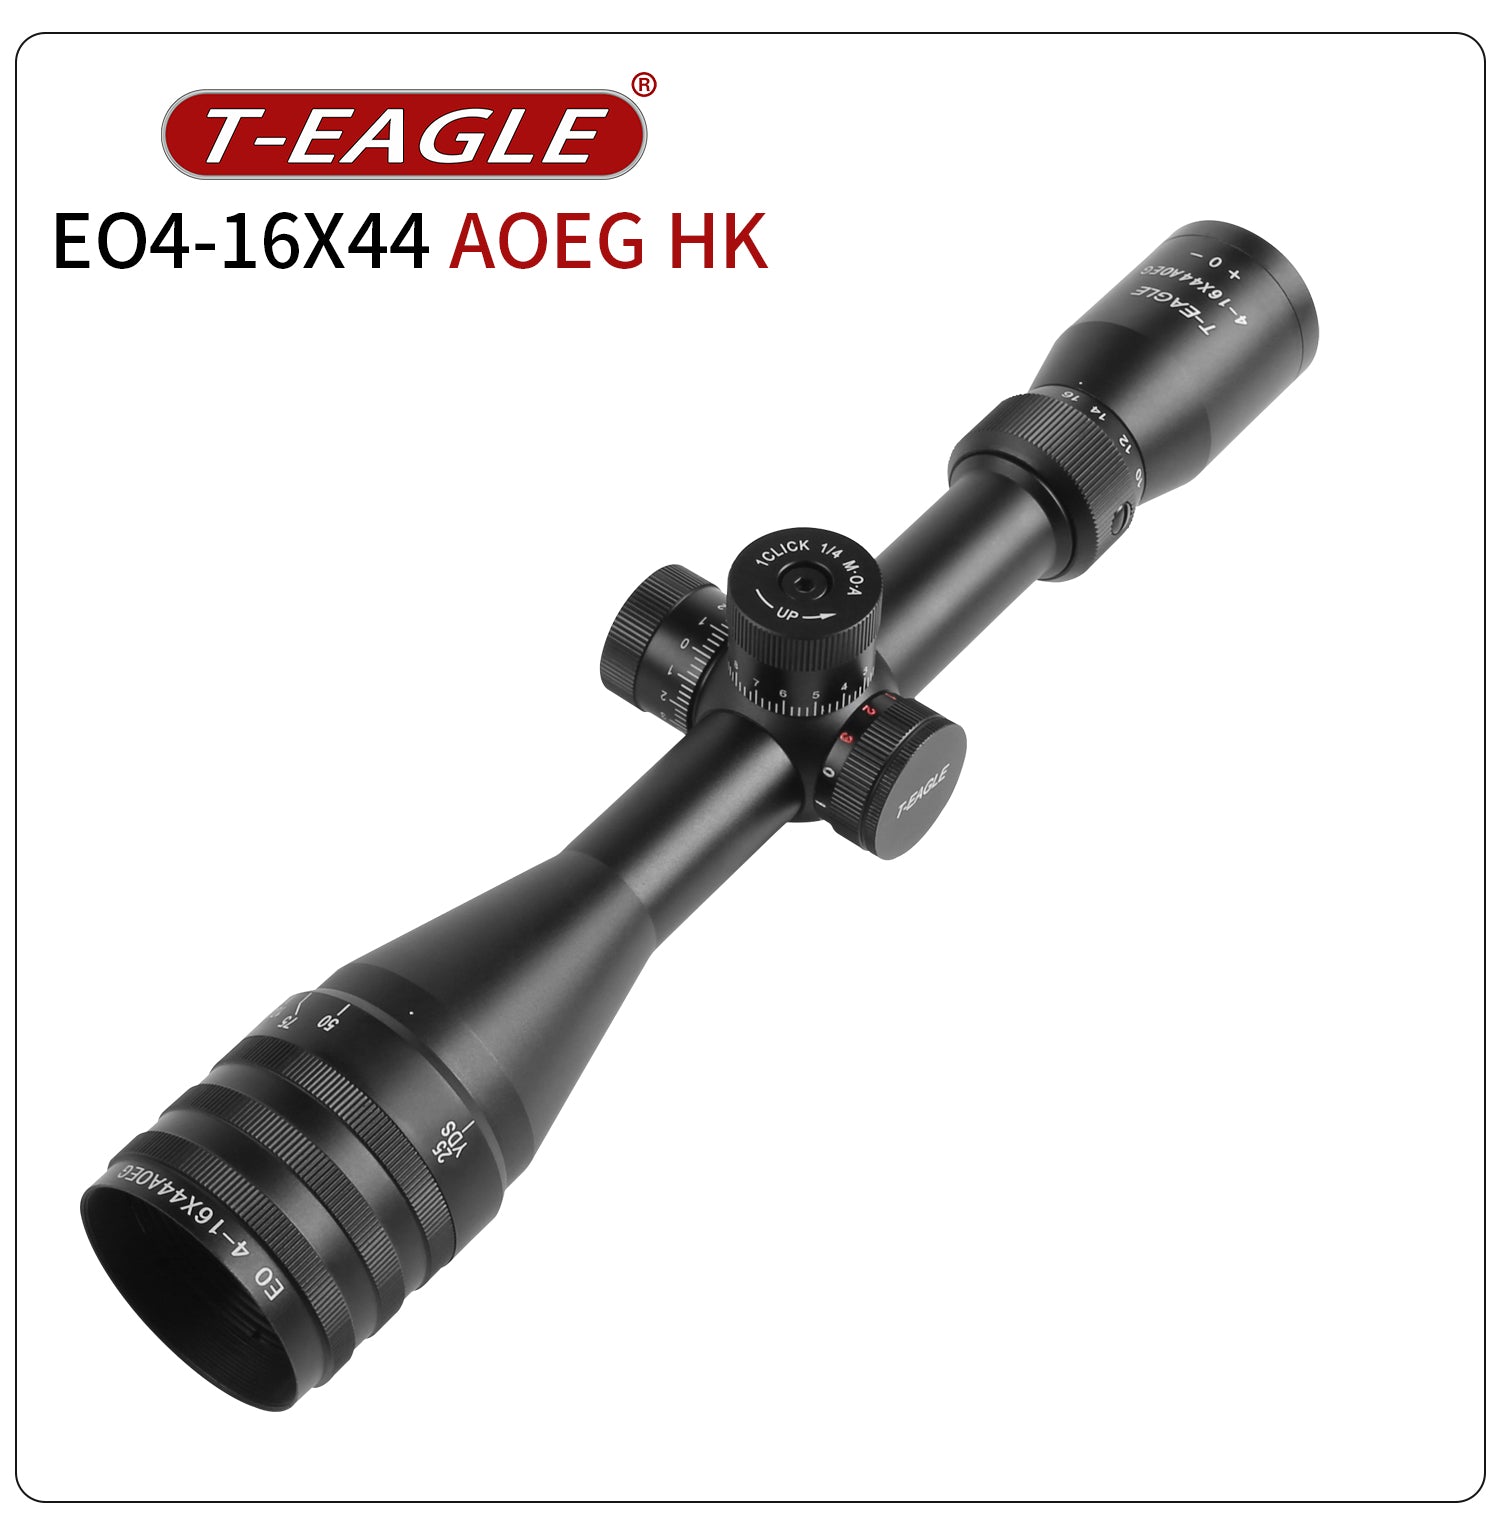 T-Eagle EO 4-16x44 AOEG Tactical Riflescope